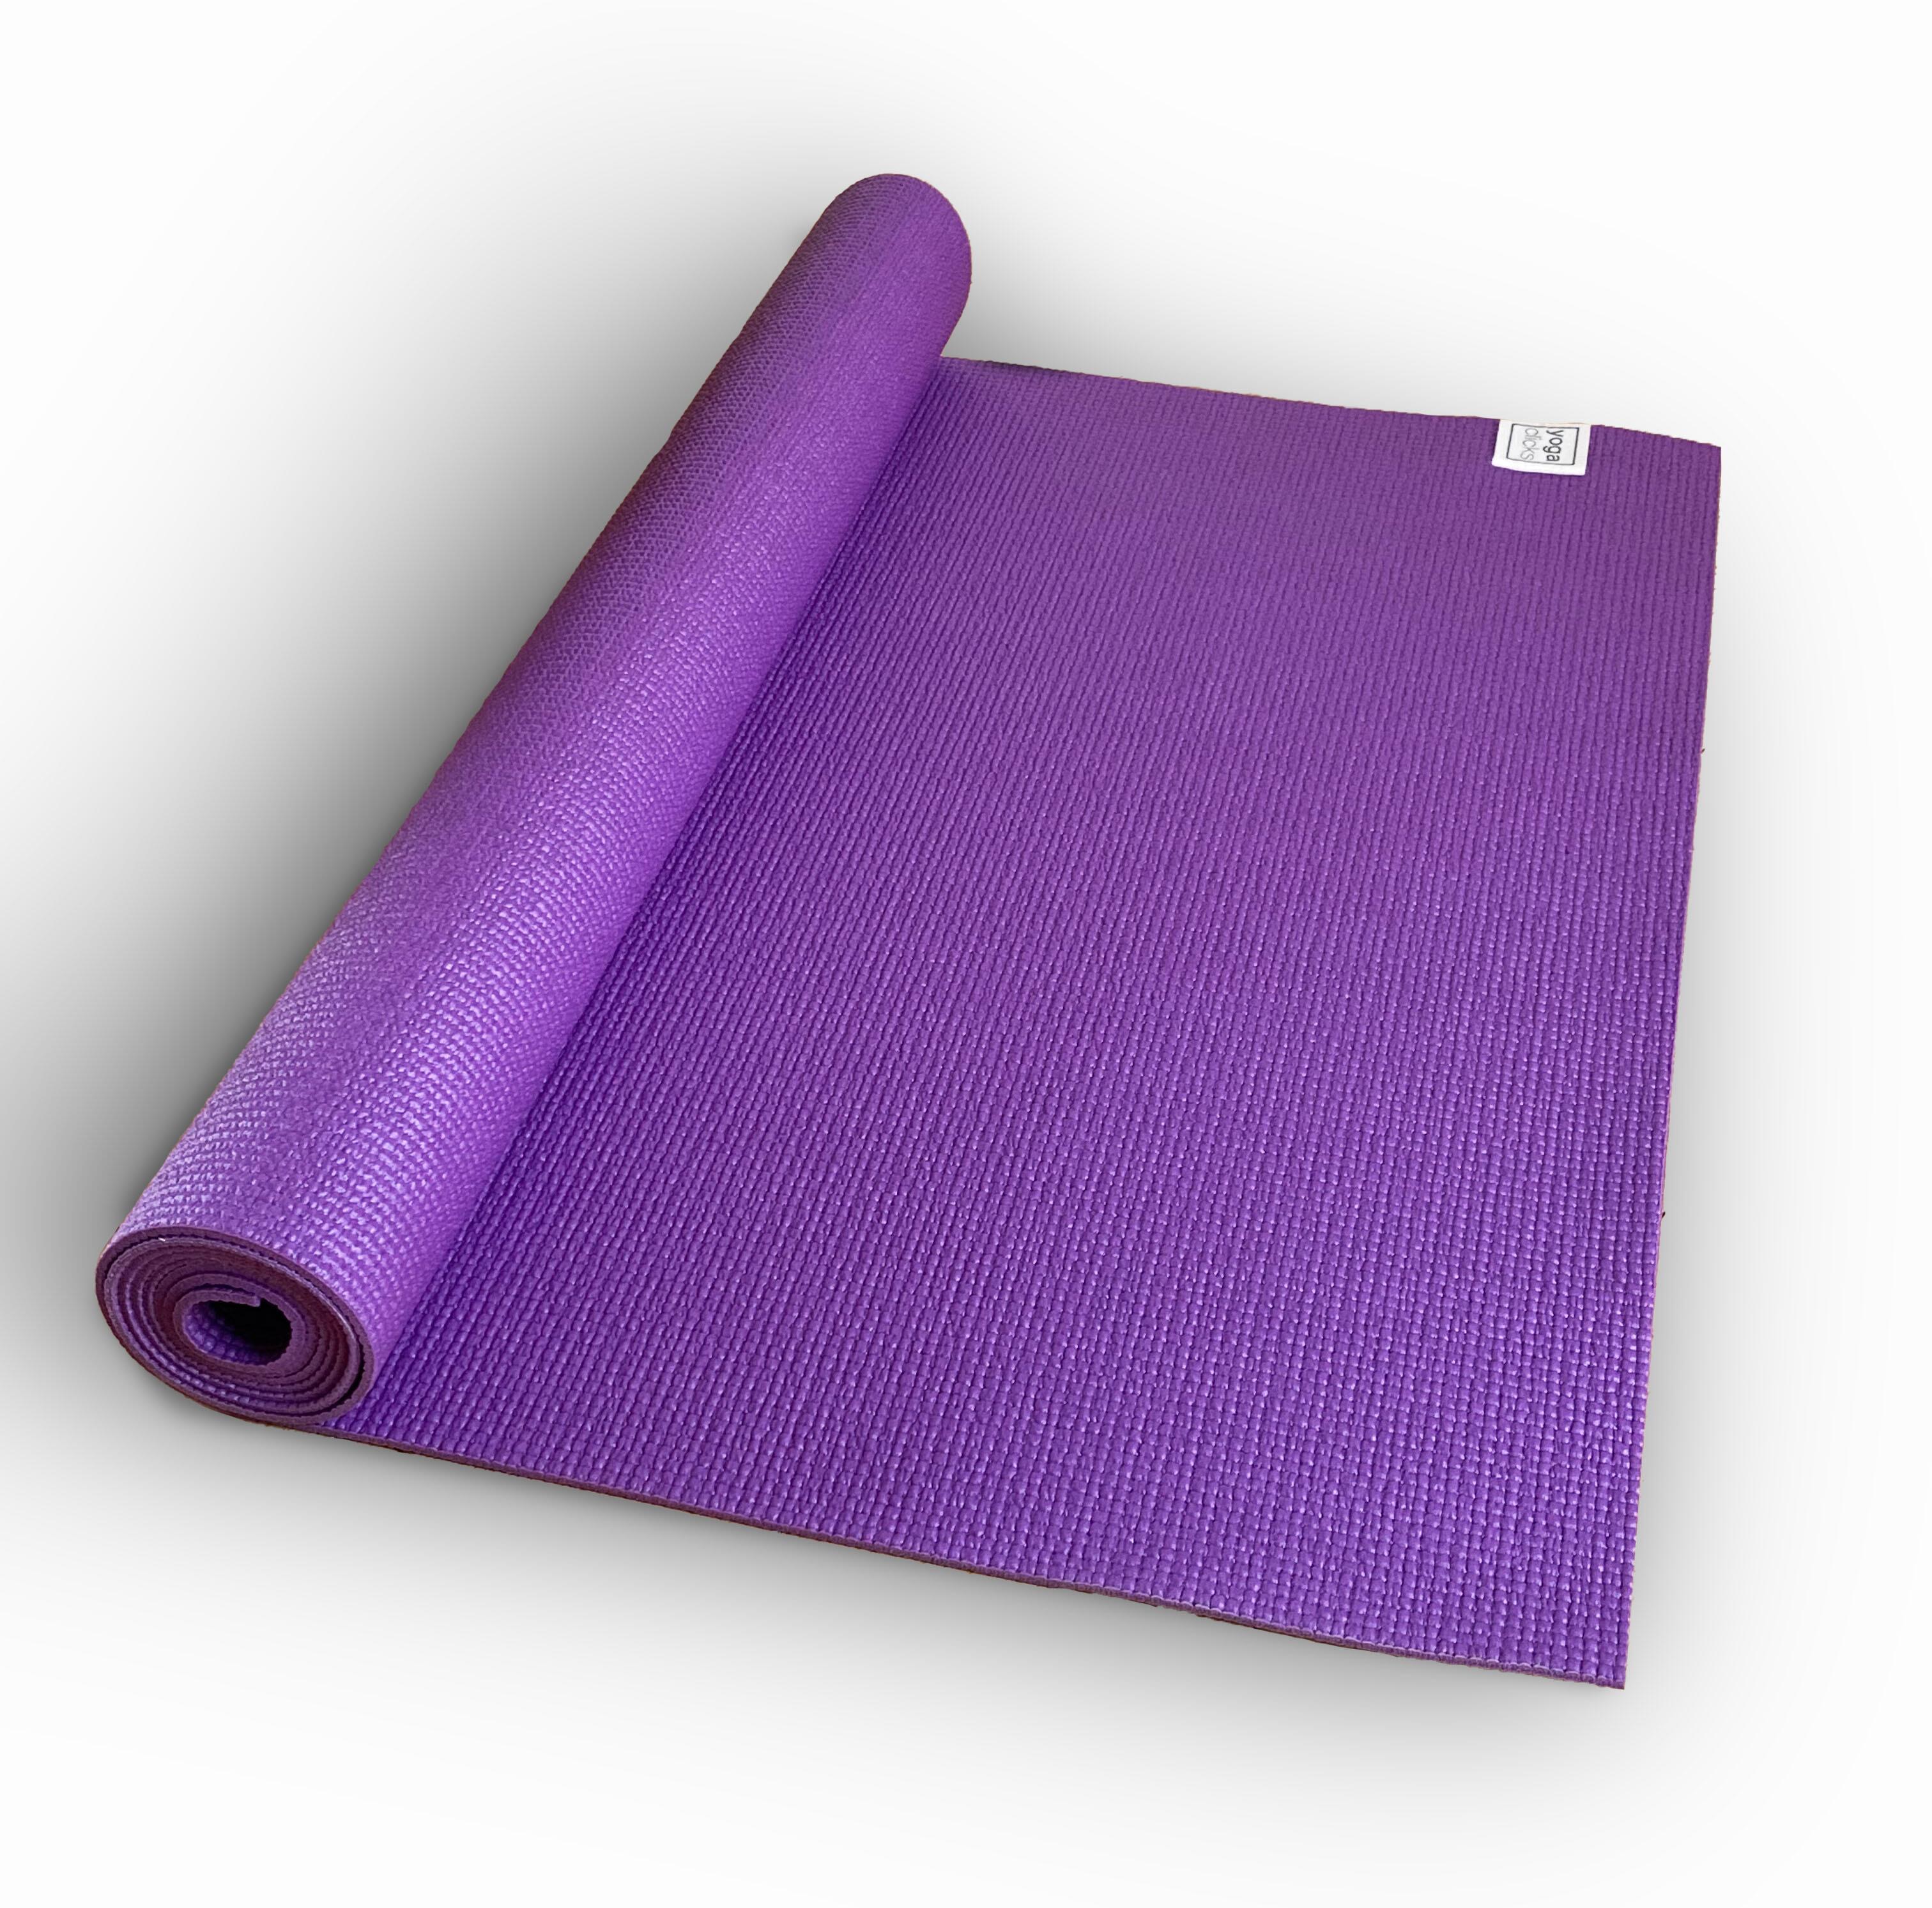 Luxury Yoga Mat within a Kit - Yoga Mats